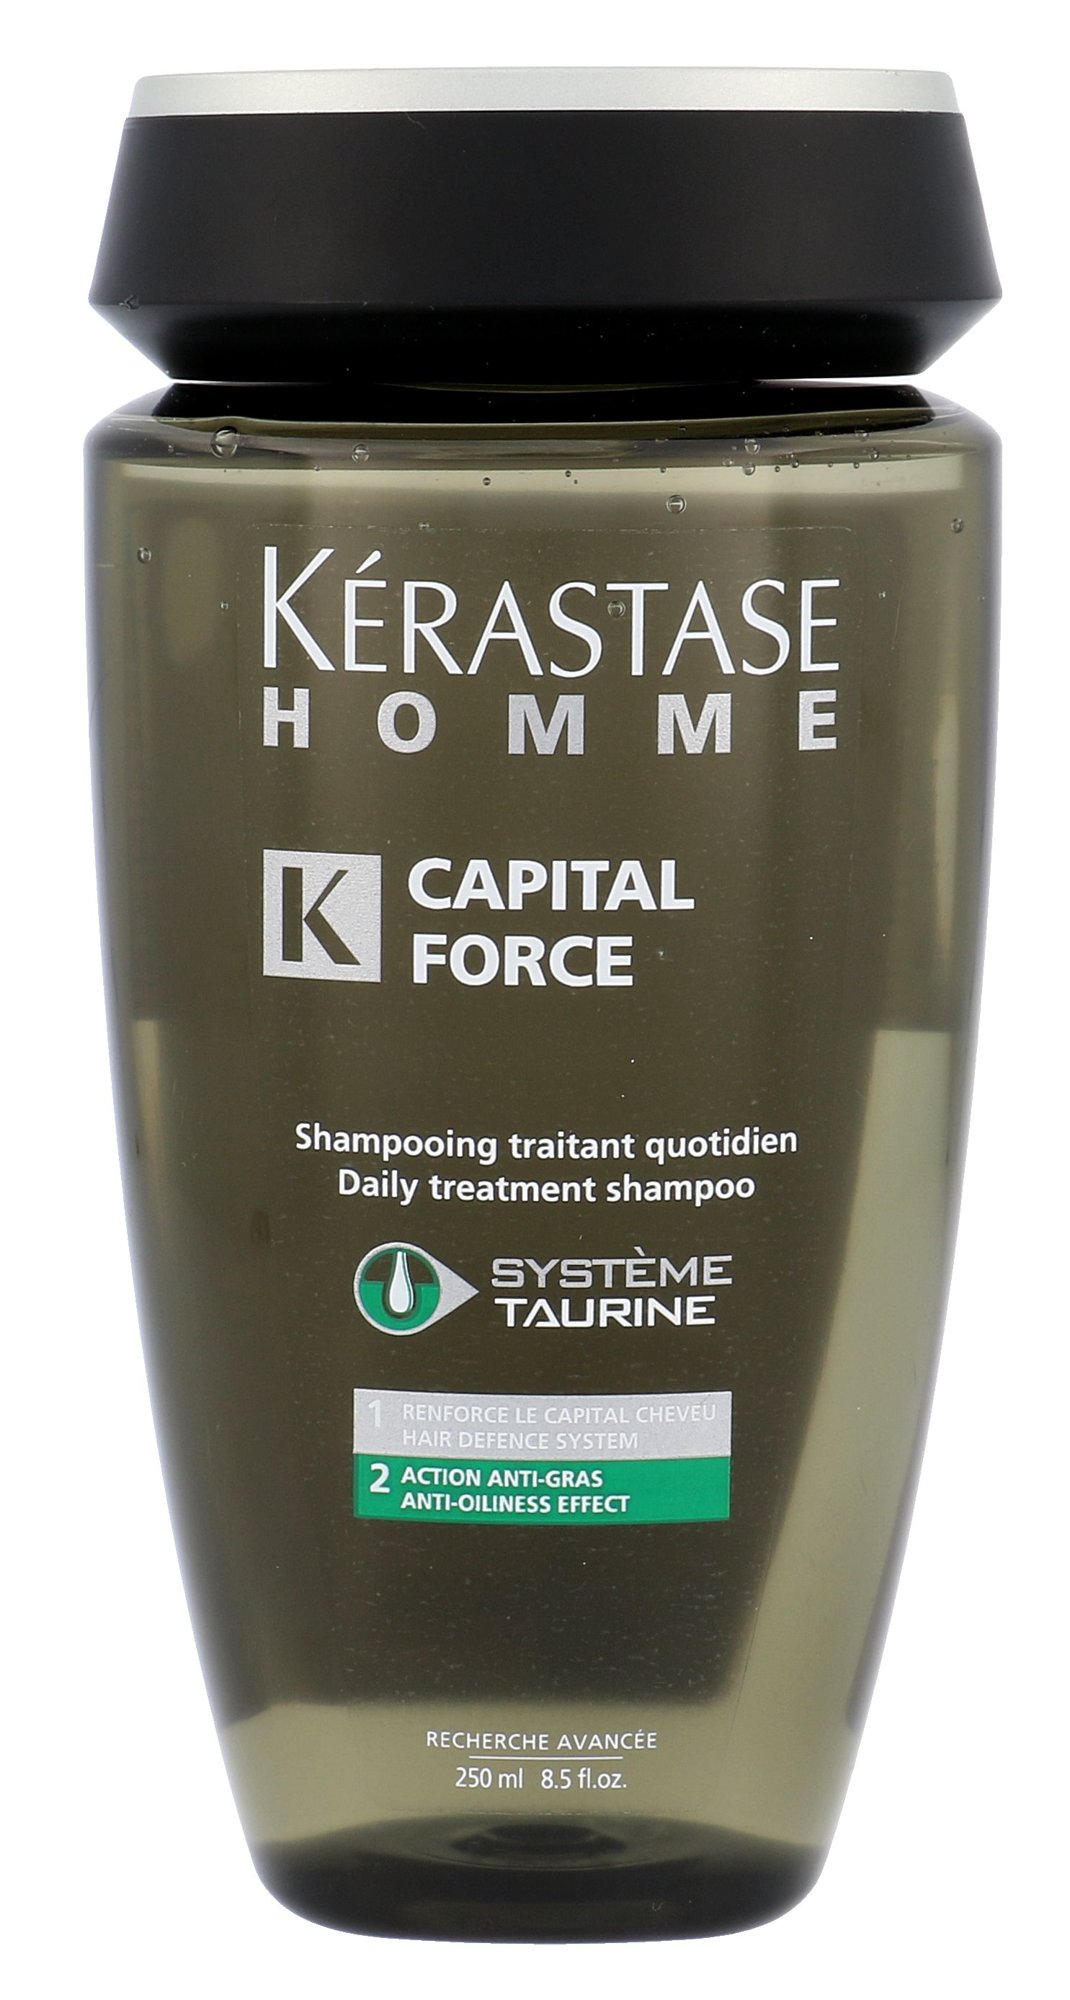 Kérastase Homme Capital Force AntiOiliness Effect šampūnas